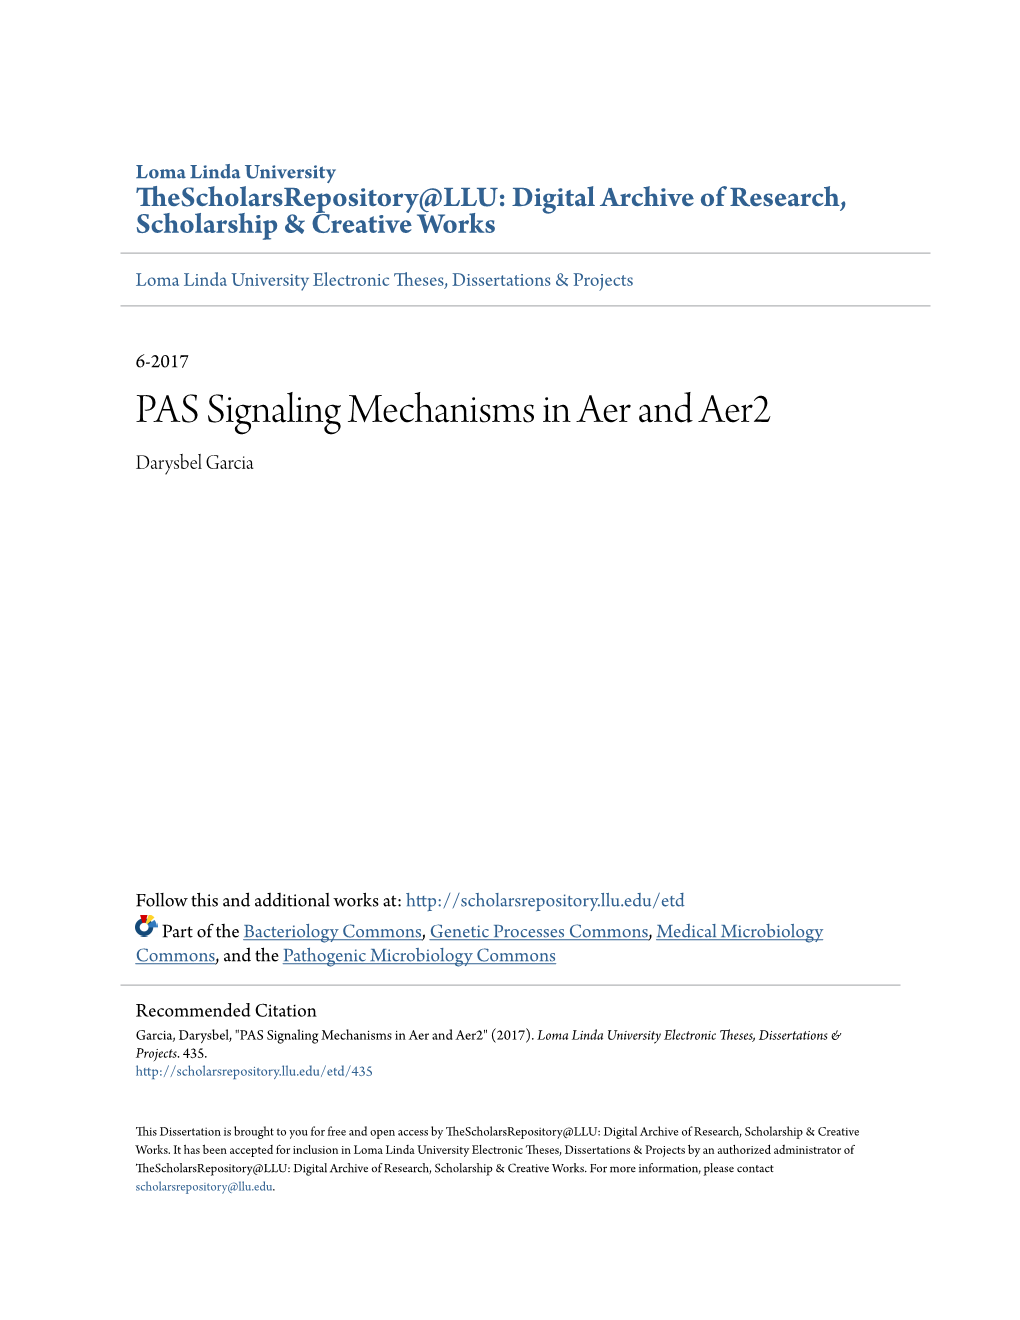 PAS Signaling Mechanisms in Aer and Aer2 Darysbel Garcia